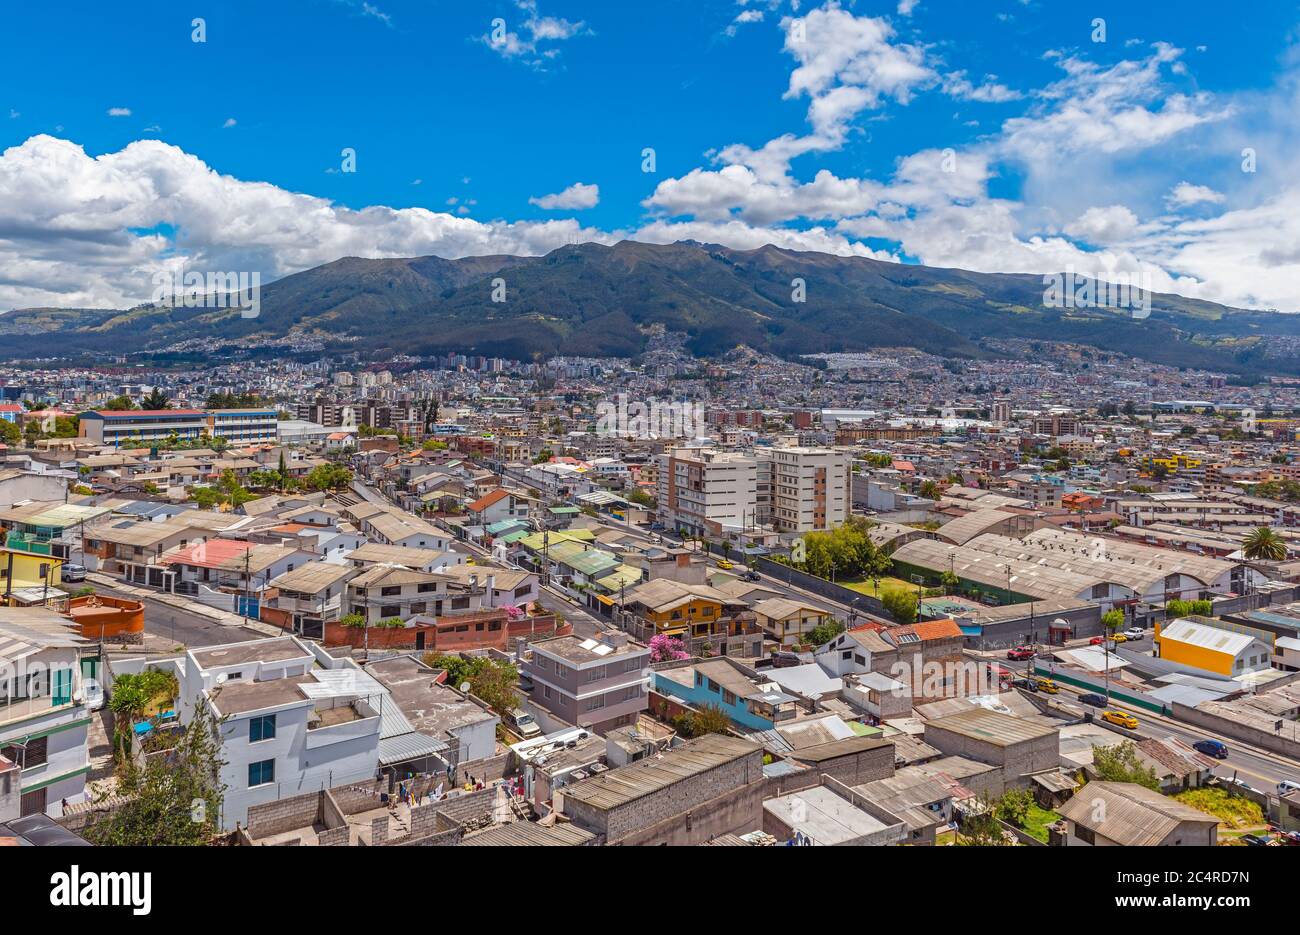 Aerial urban skyline of Quito city with the Pichincha volcano, Ecuador. Stock Photo